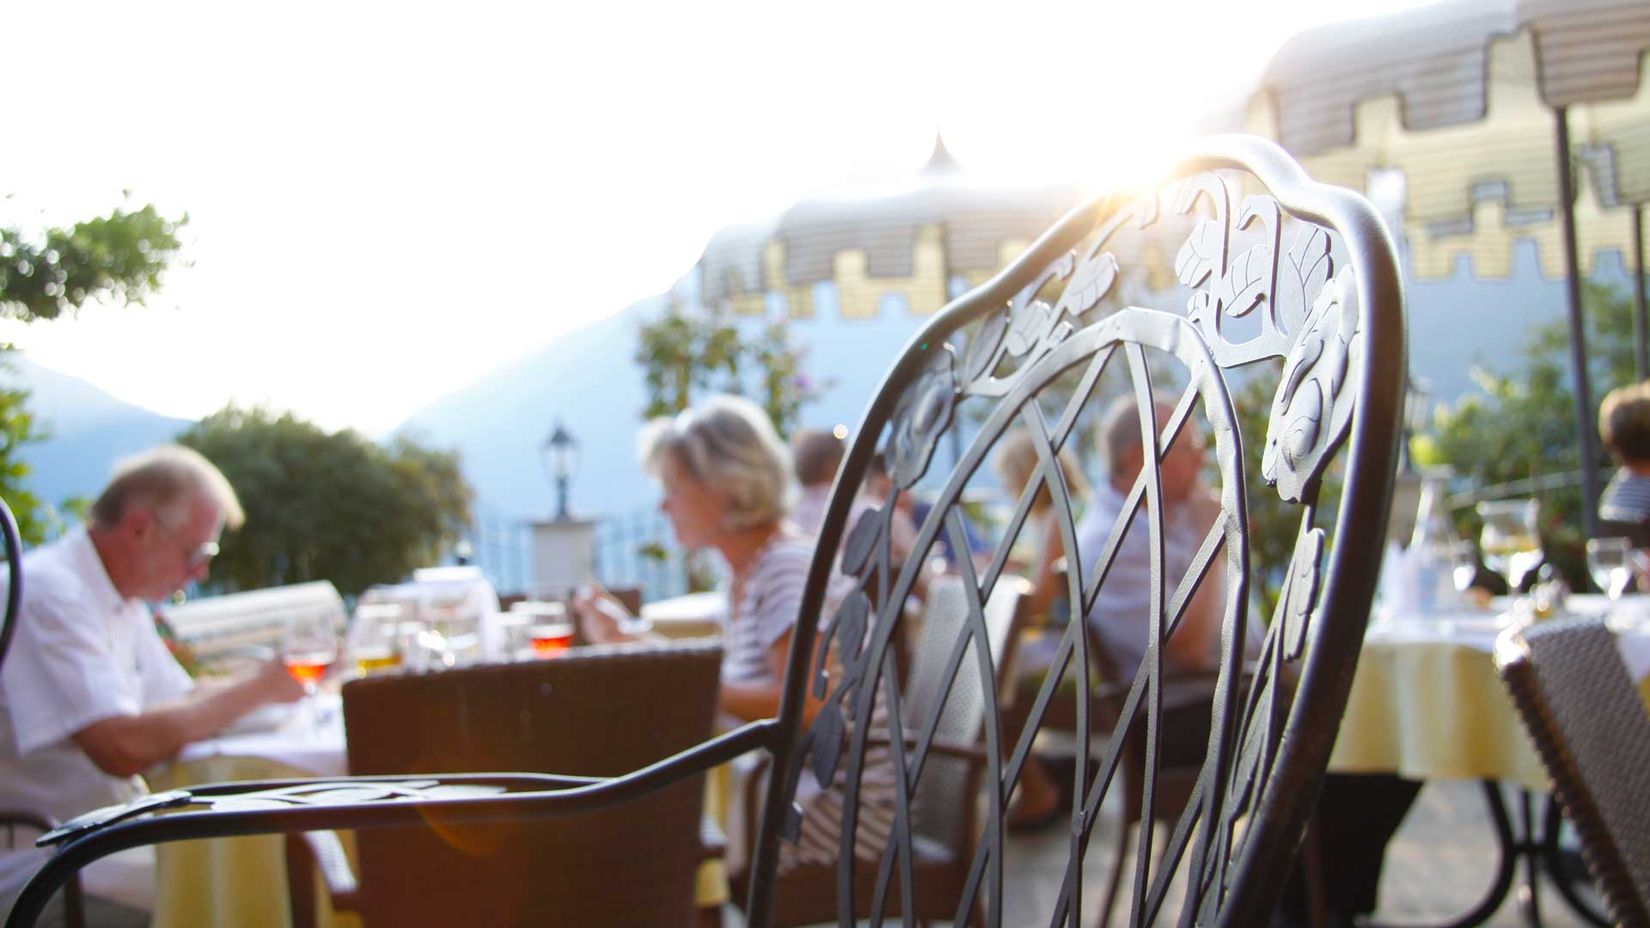 Atmosfera piacevole, Hotel Alpenrose, Merano e dintorni